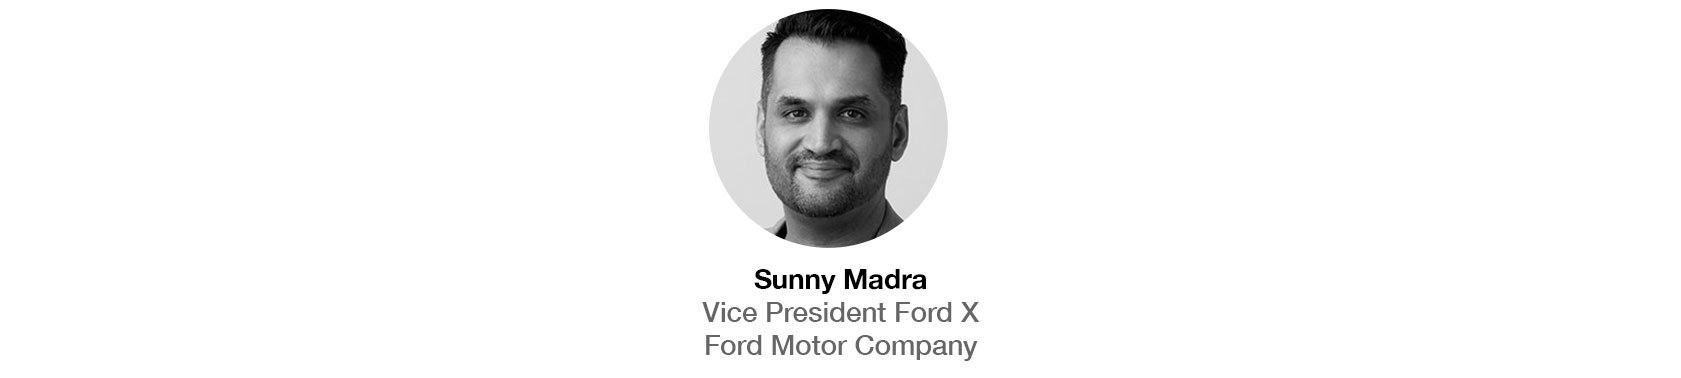 Sunny Madra, Vice President Ford X, Ford Motor Company